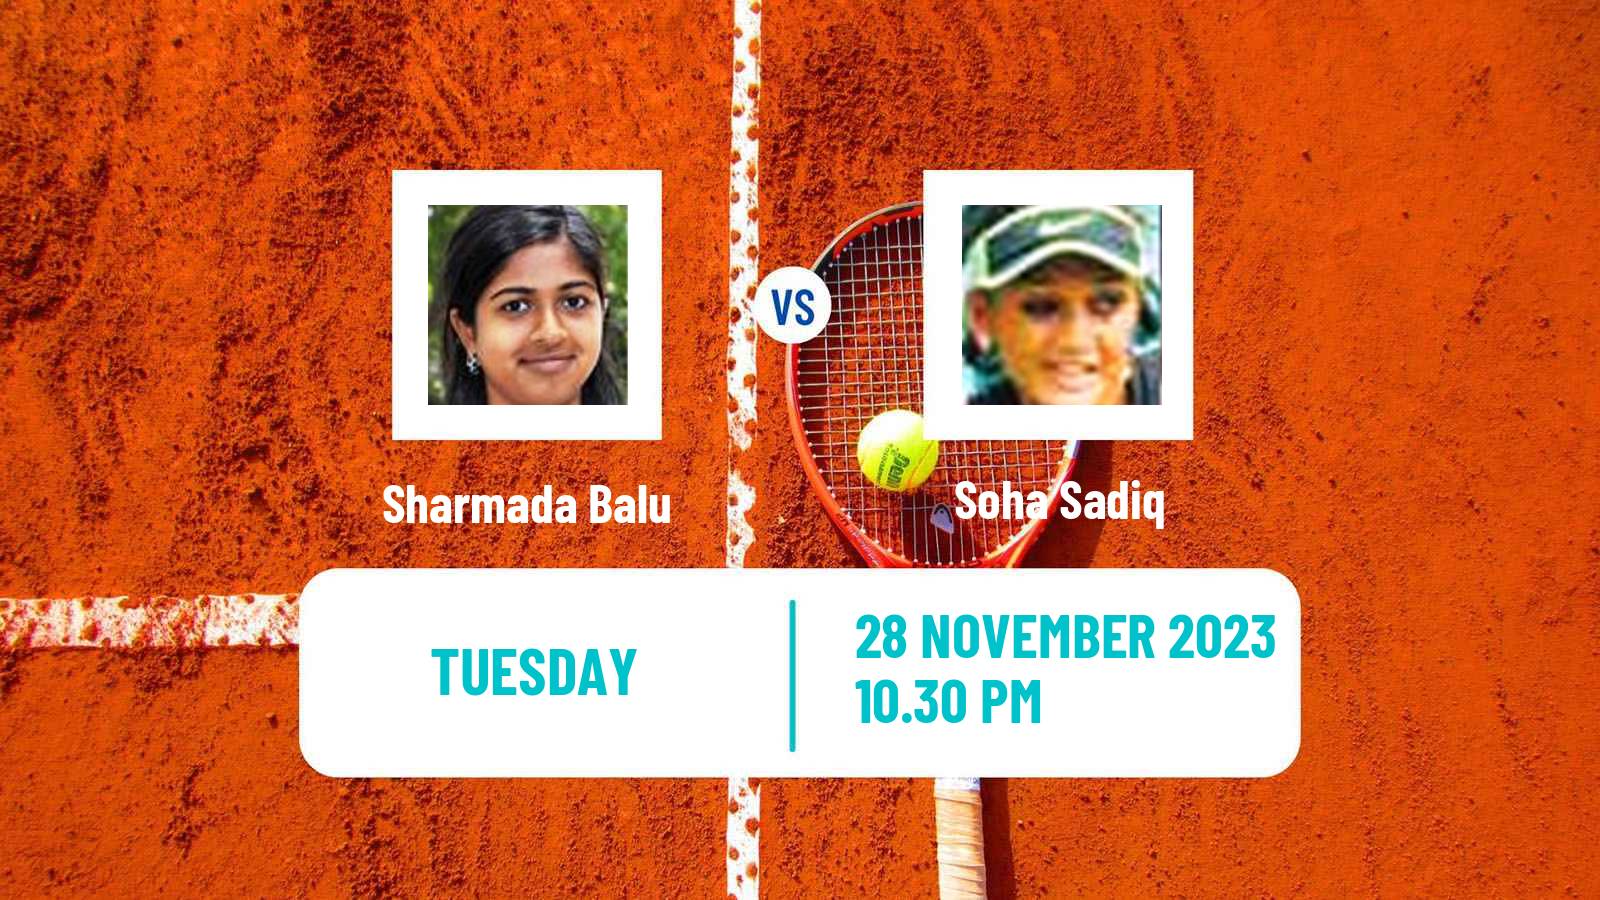 Tennis ITF W15 Ahmedabad Women 2023 Sharmada Balu - Soha Sadiq